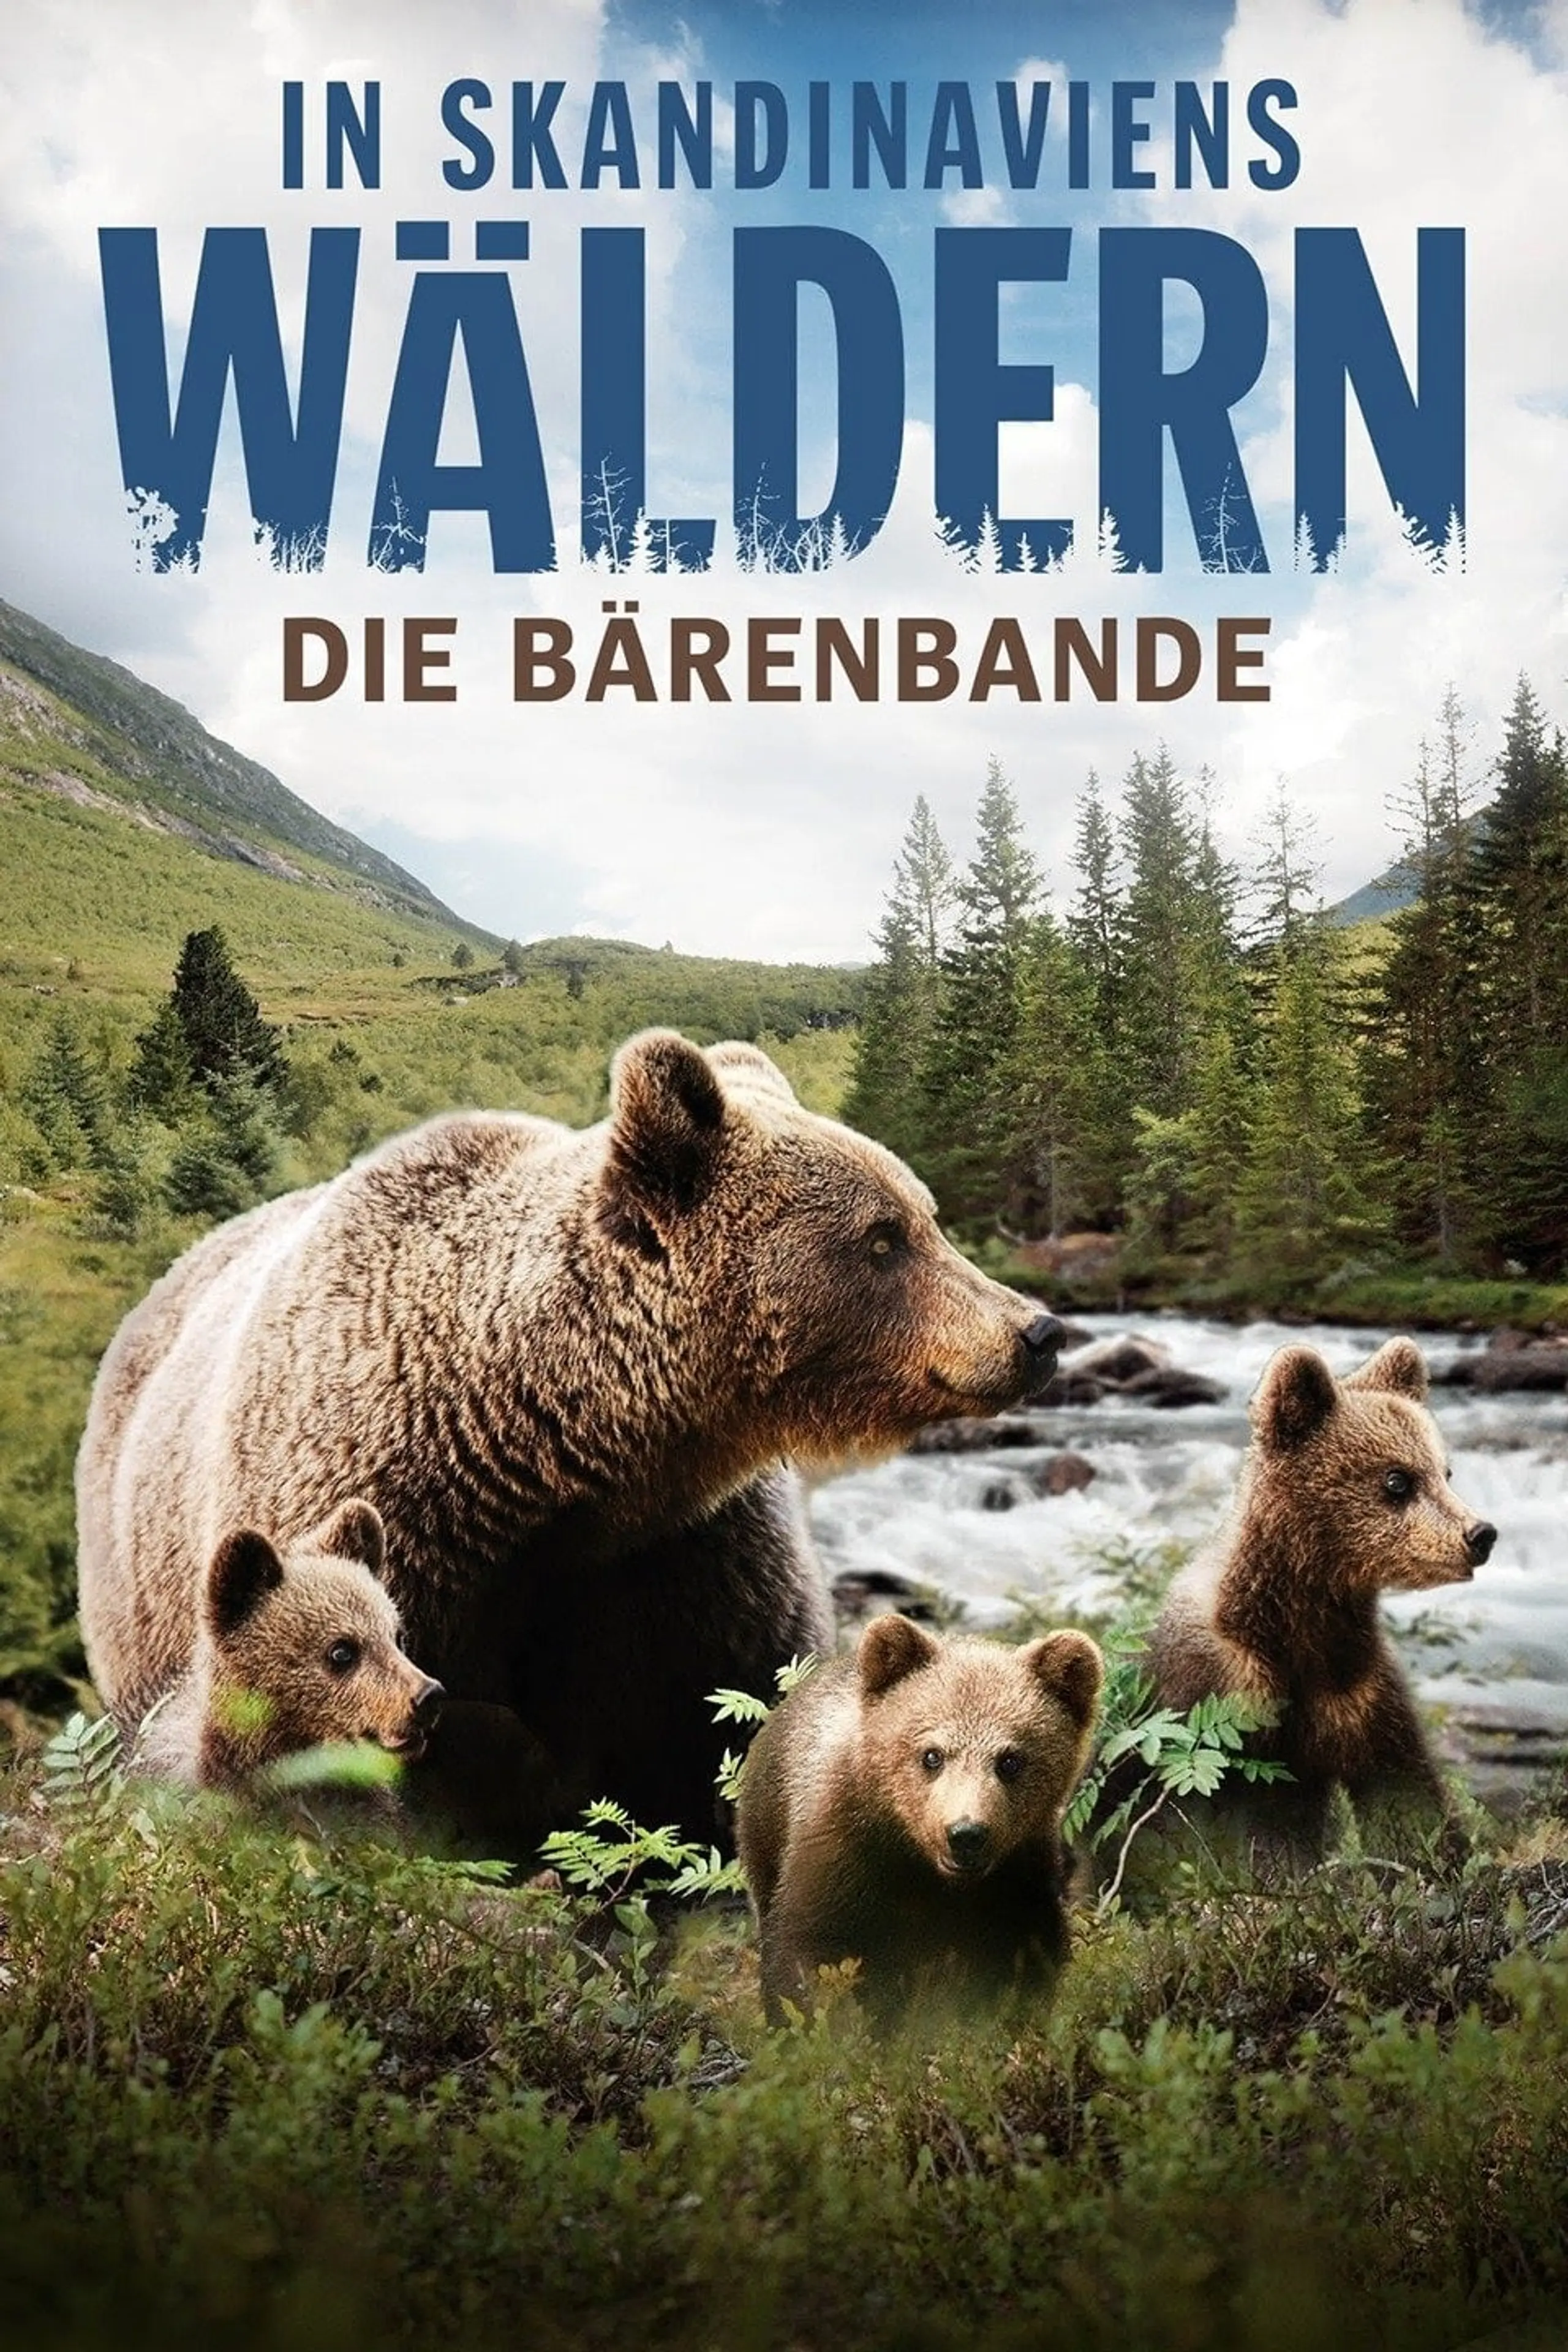 In Skandinaviens Wäldern - Die Bärenbande